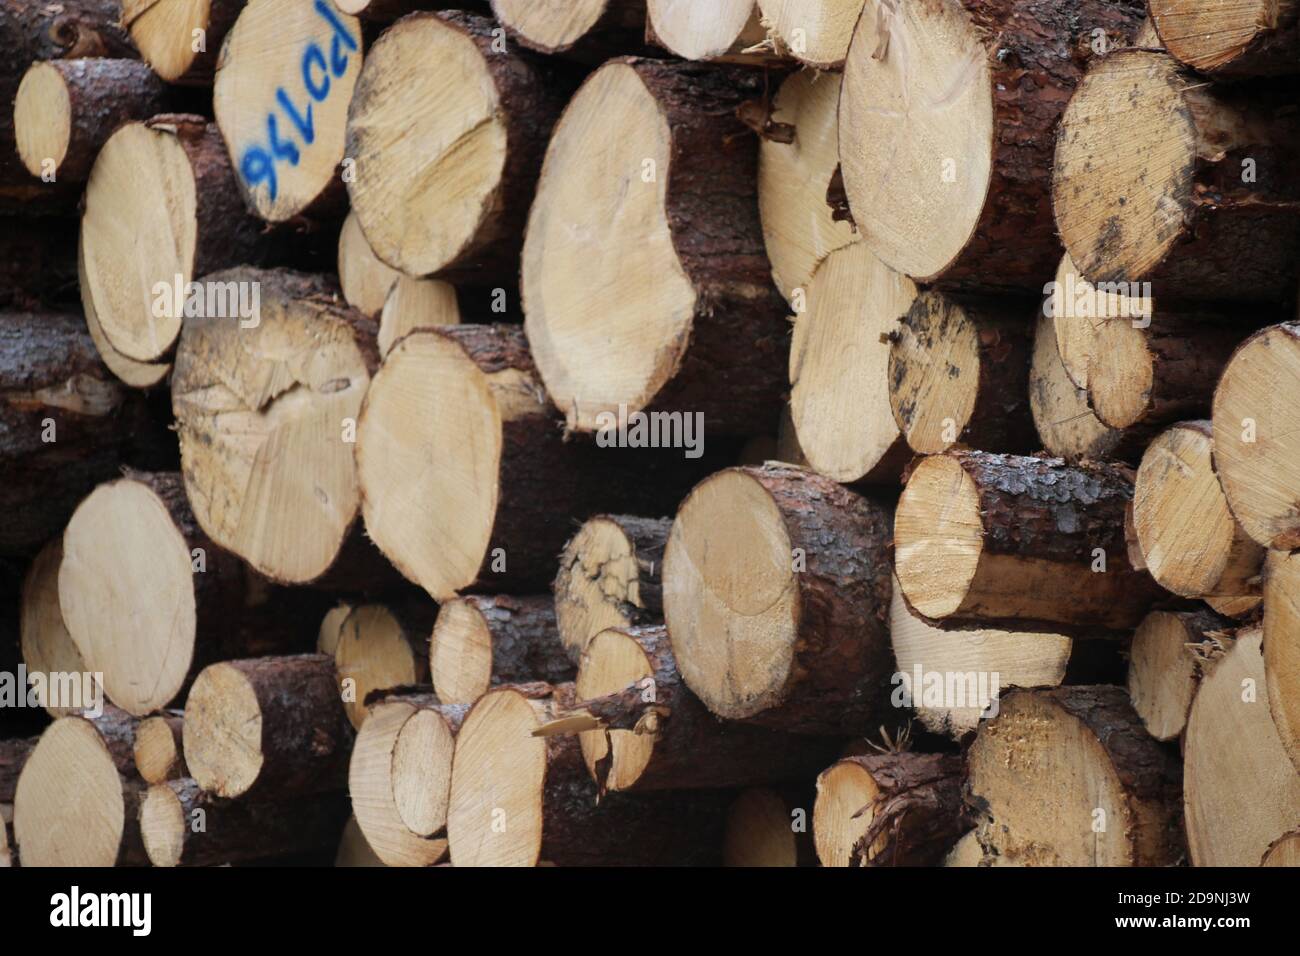 Germany, Bavaria, Upper Bavaria, Mittenwald, forest, wood warehouse, wood pile, tree trunks, Stock Photo